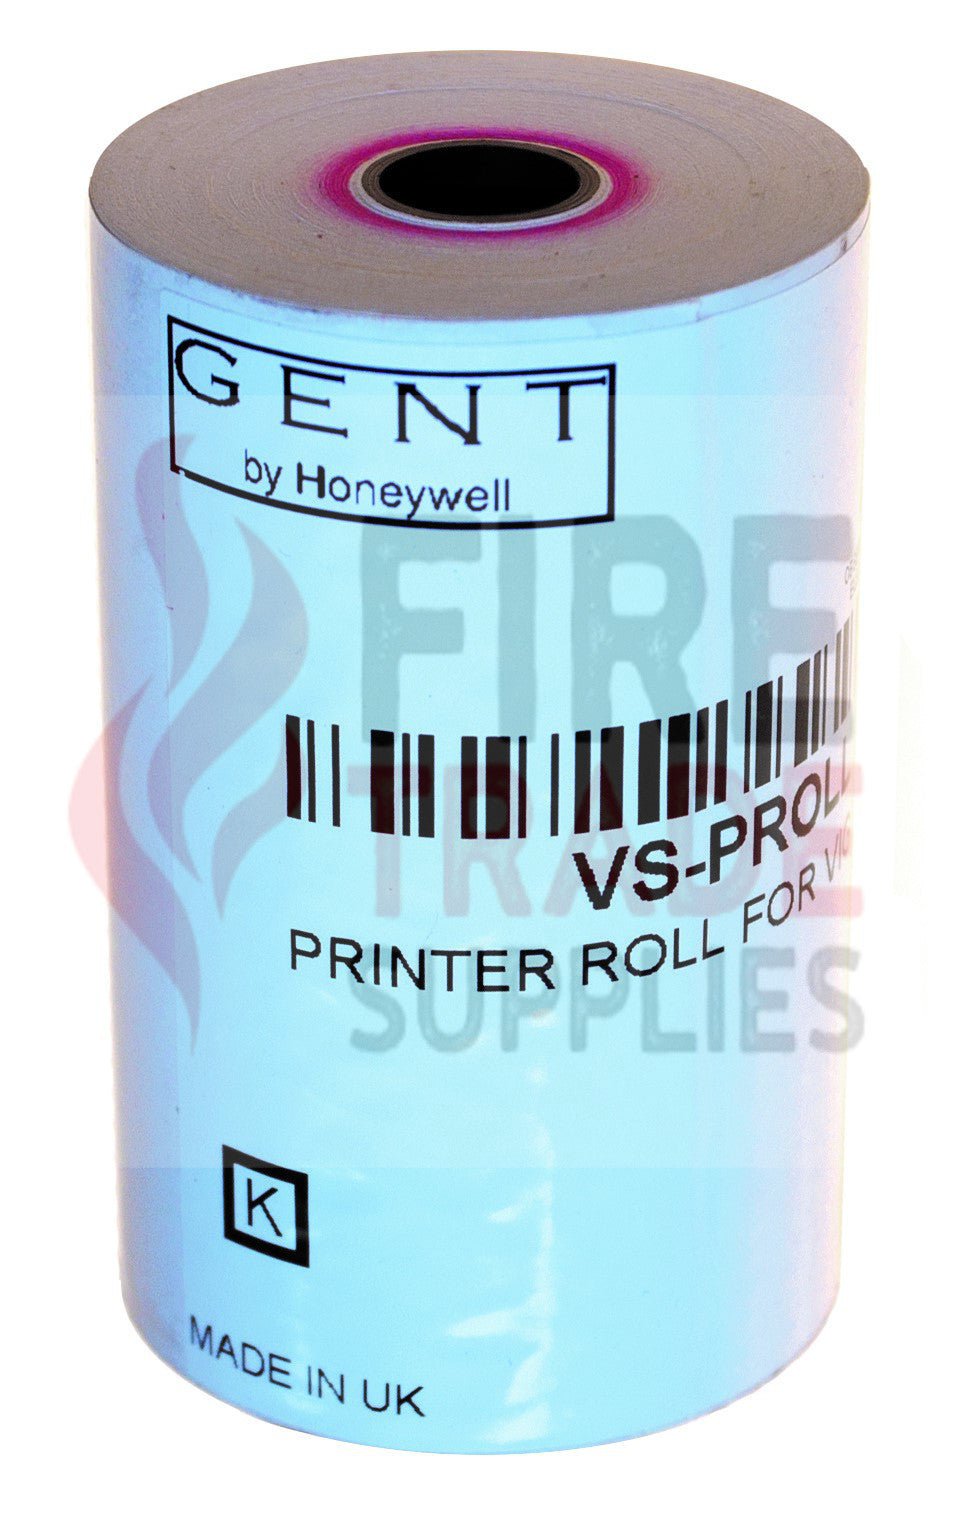 VS-PROLL Gent Vigilon Printer Roll - Fire Trade Supplies